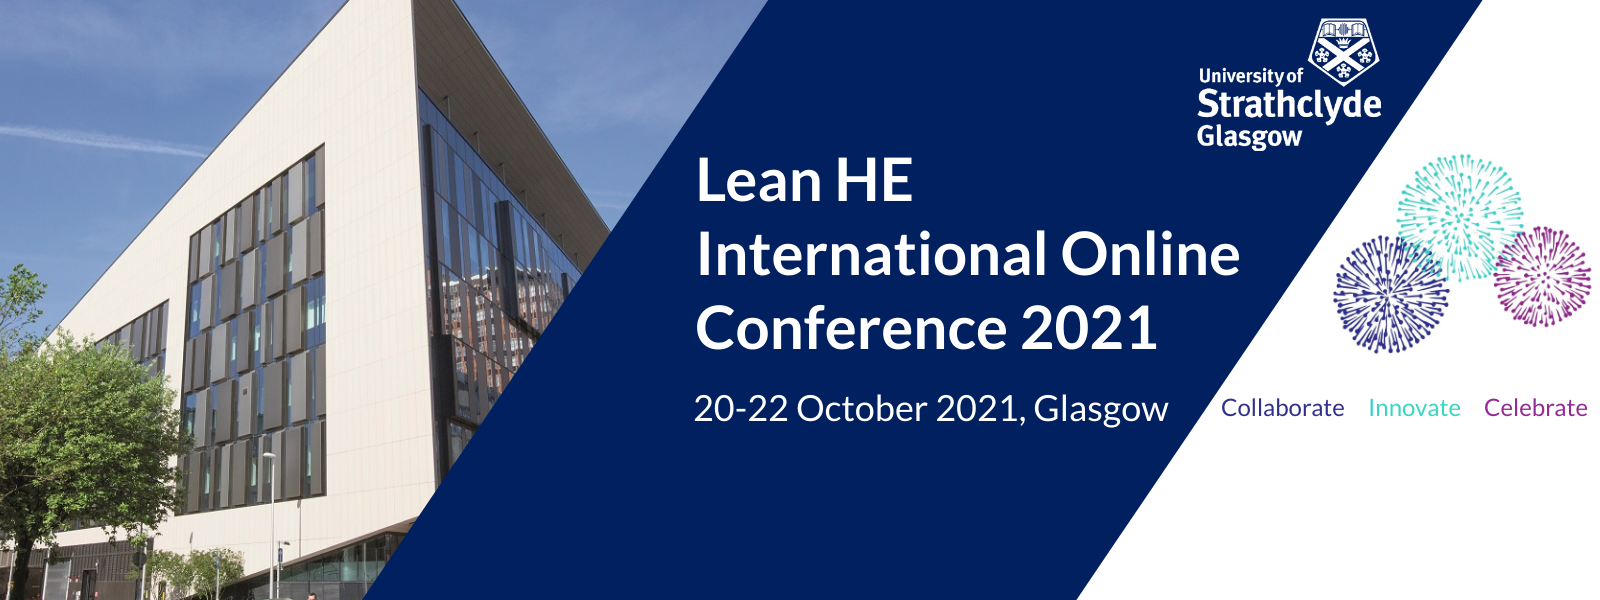 Banner advertising LeanHE online conference 2021